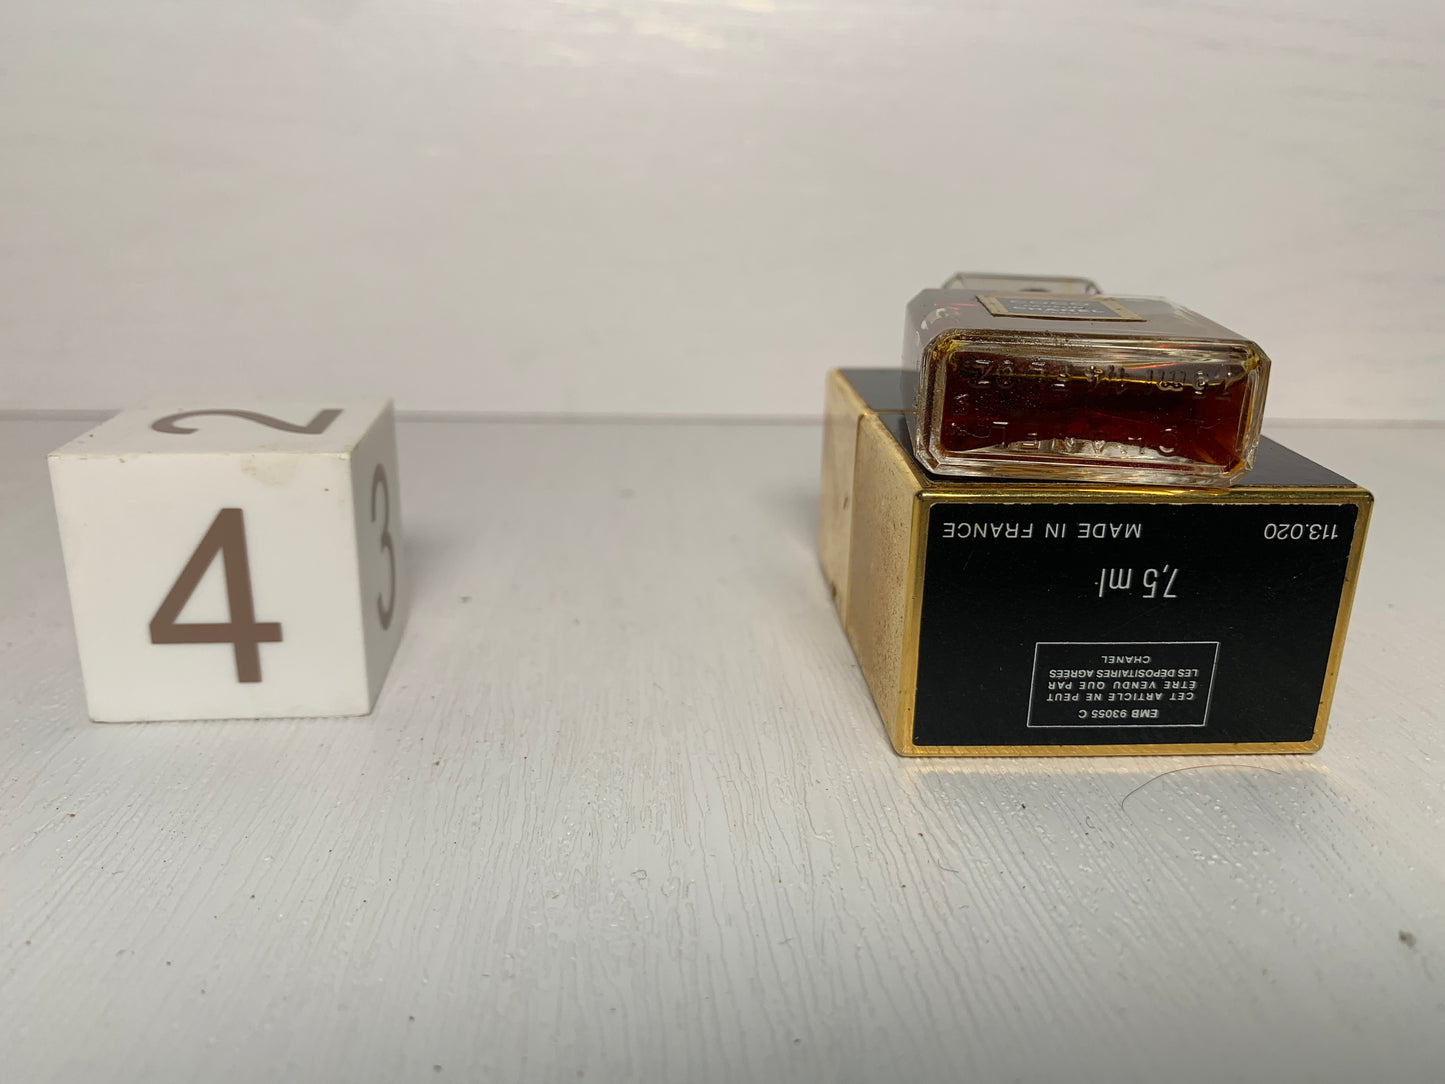 Prelude fidji 7.5ml parfum perfume  - 14NOV